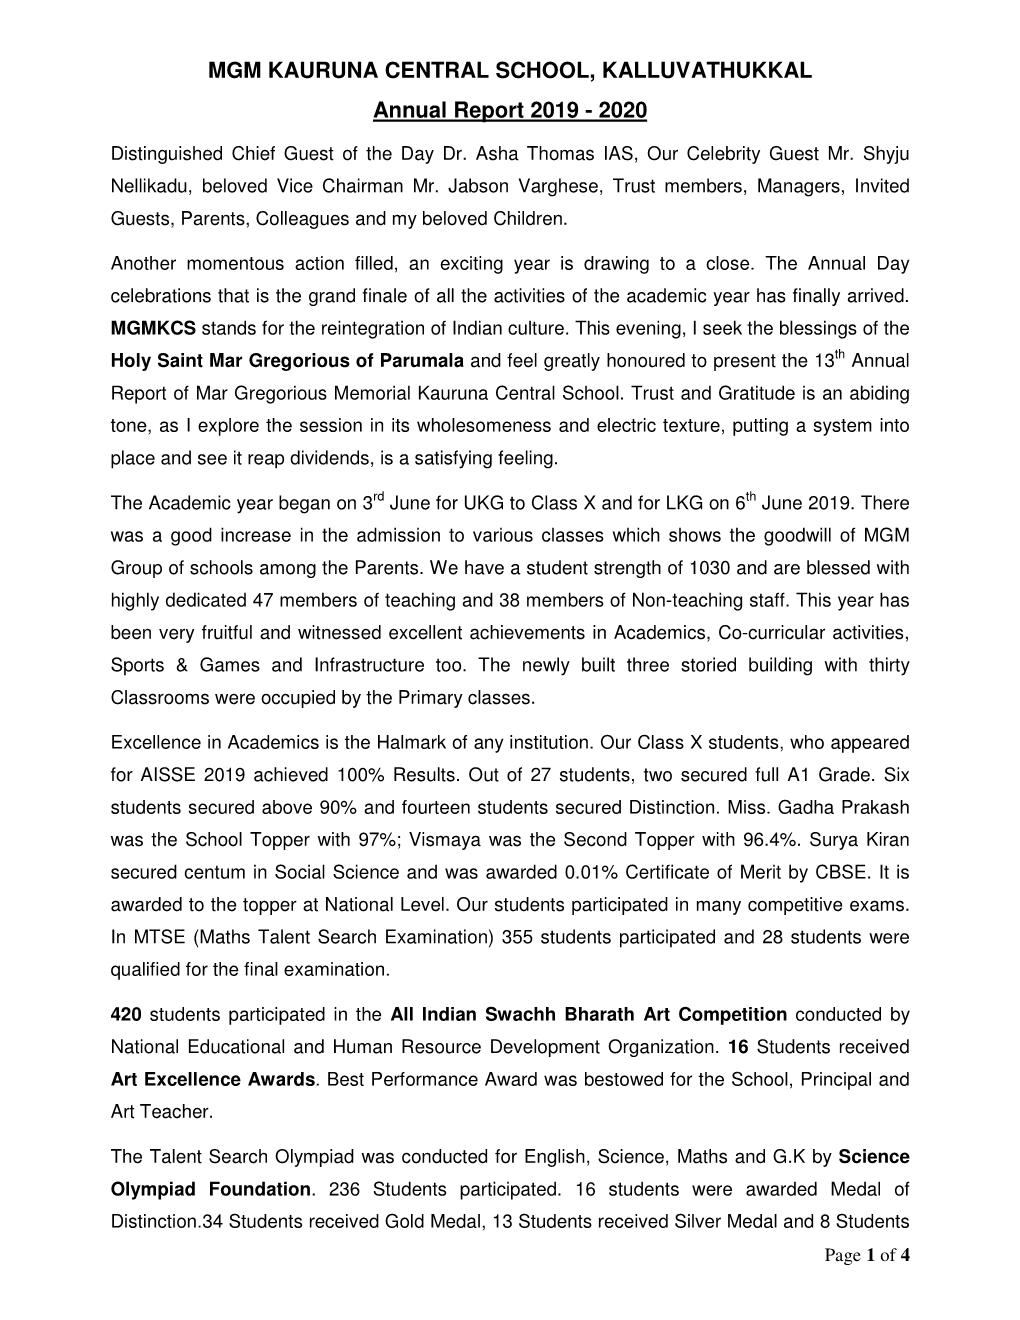 MGM KAURUNA CENTRAL SCHOOL, KALLUVATHUKKAL Annual Report 2019 - 2020